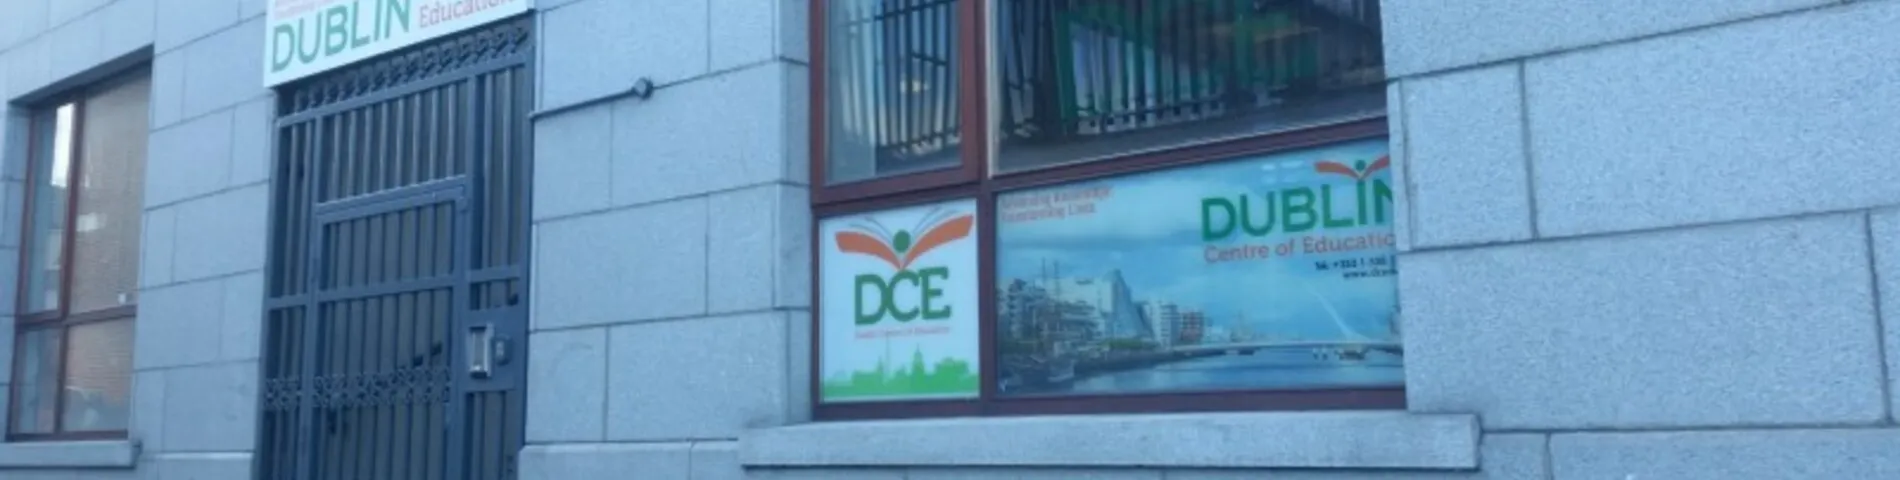 Dublin Centre of Education afbeelding 1